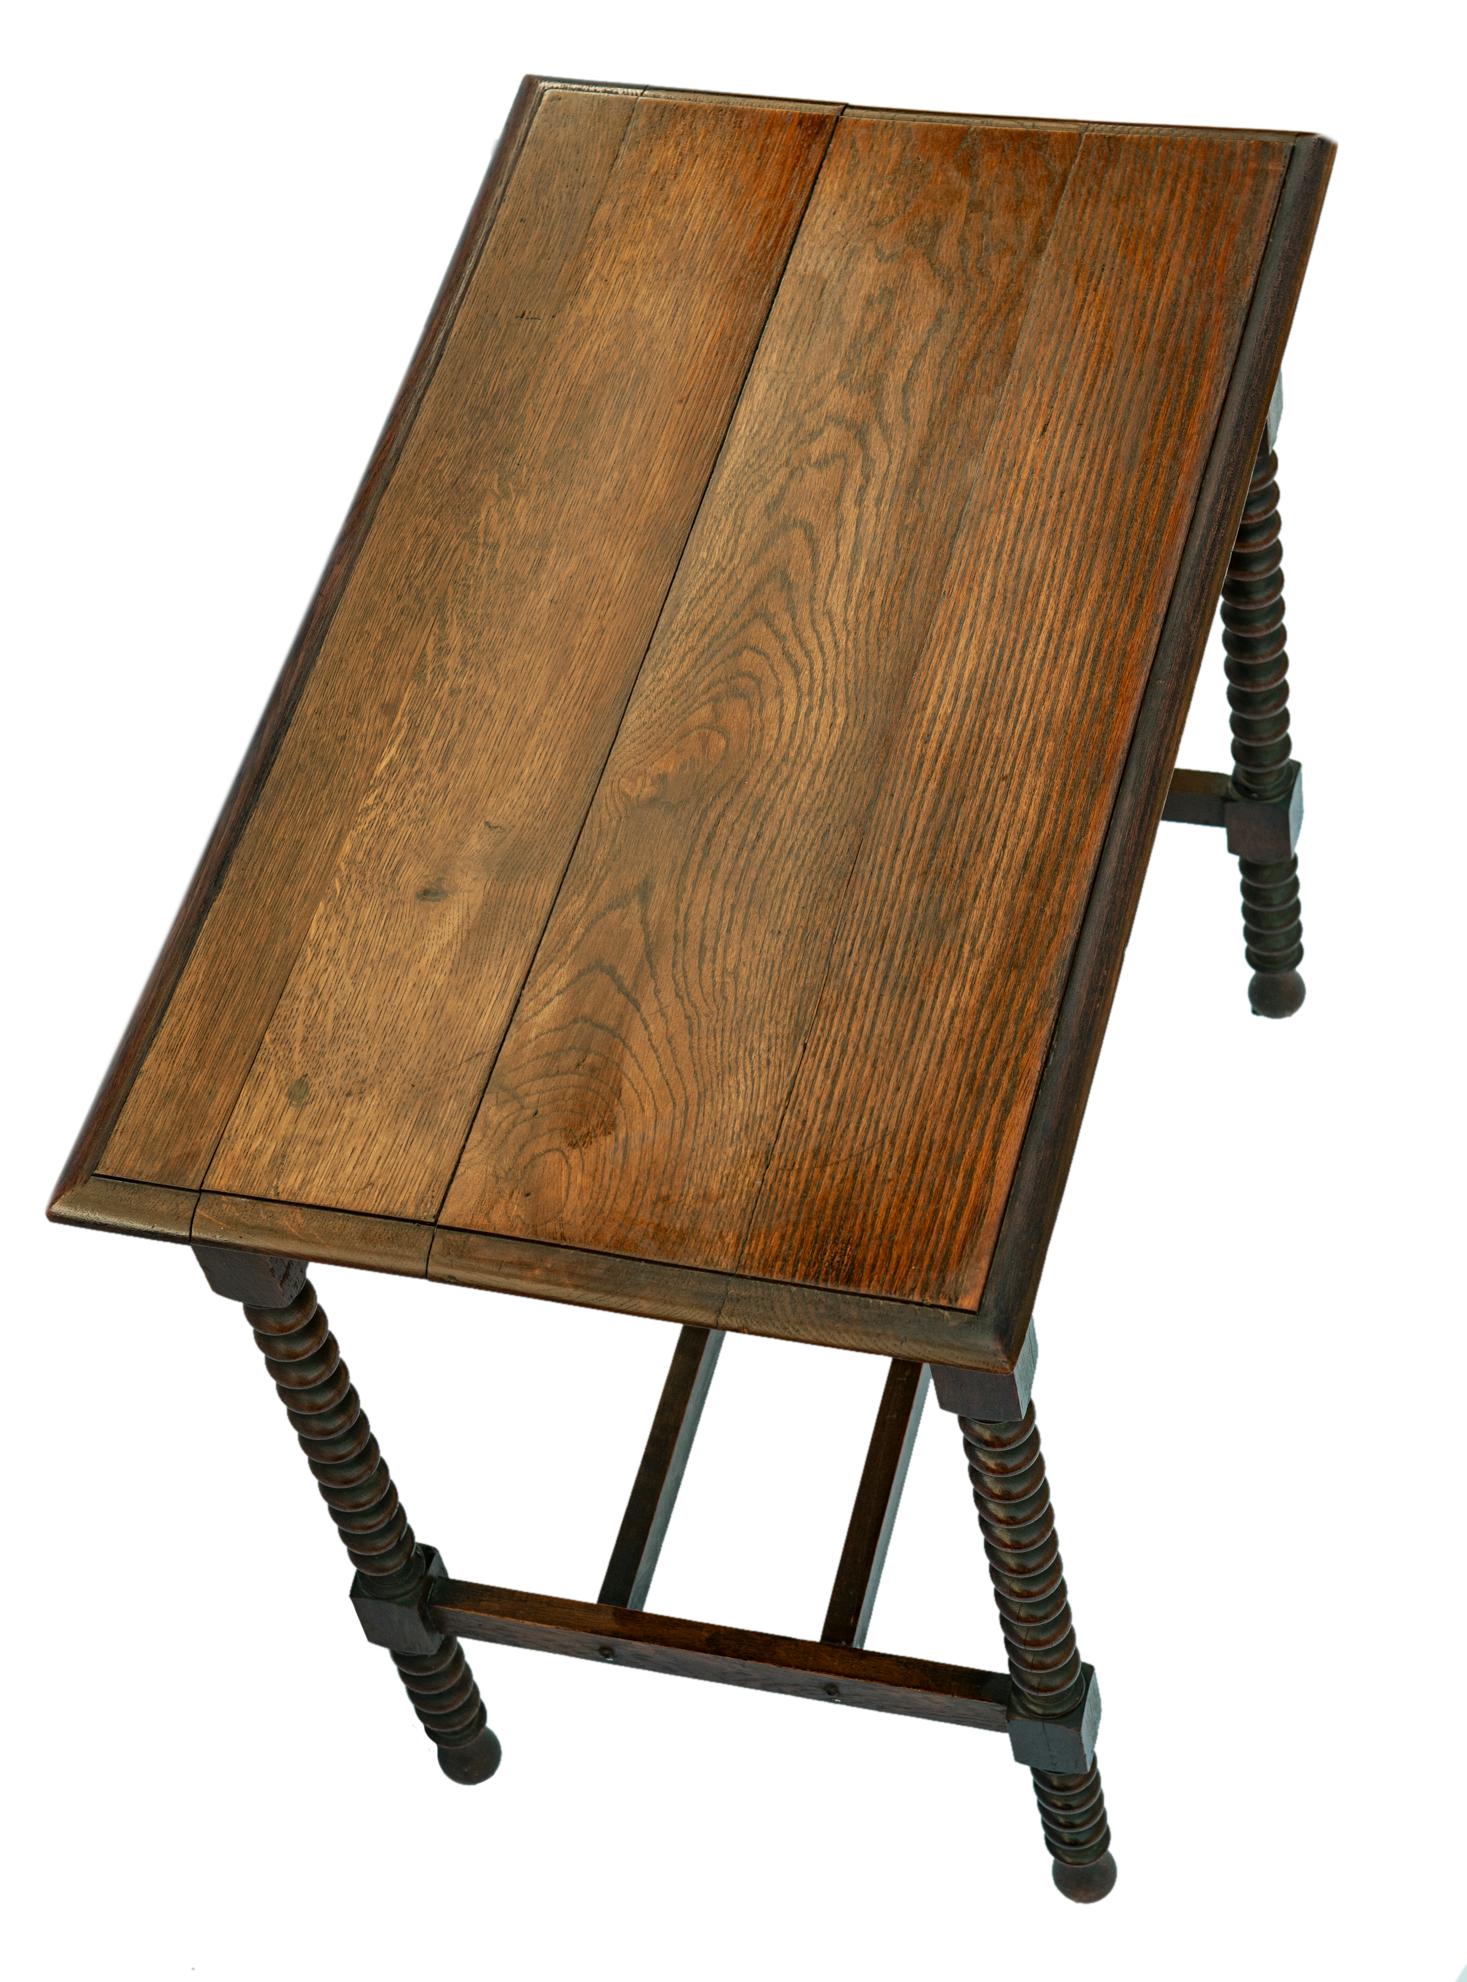 Tall Oak Console Table with Spool Legs & Decorative Apron 3